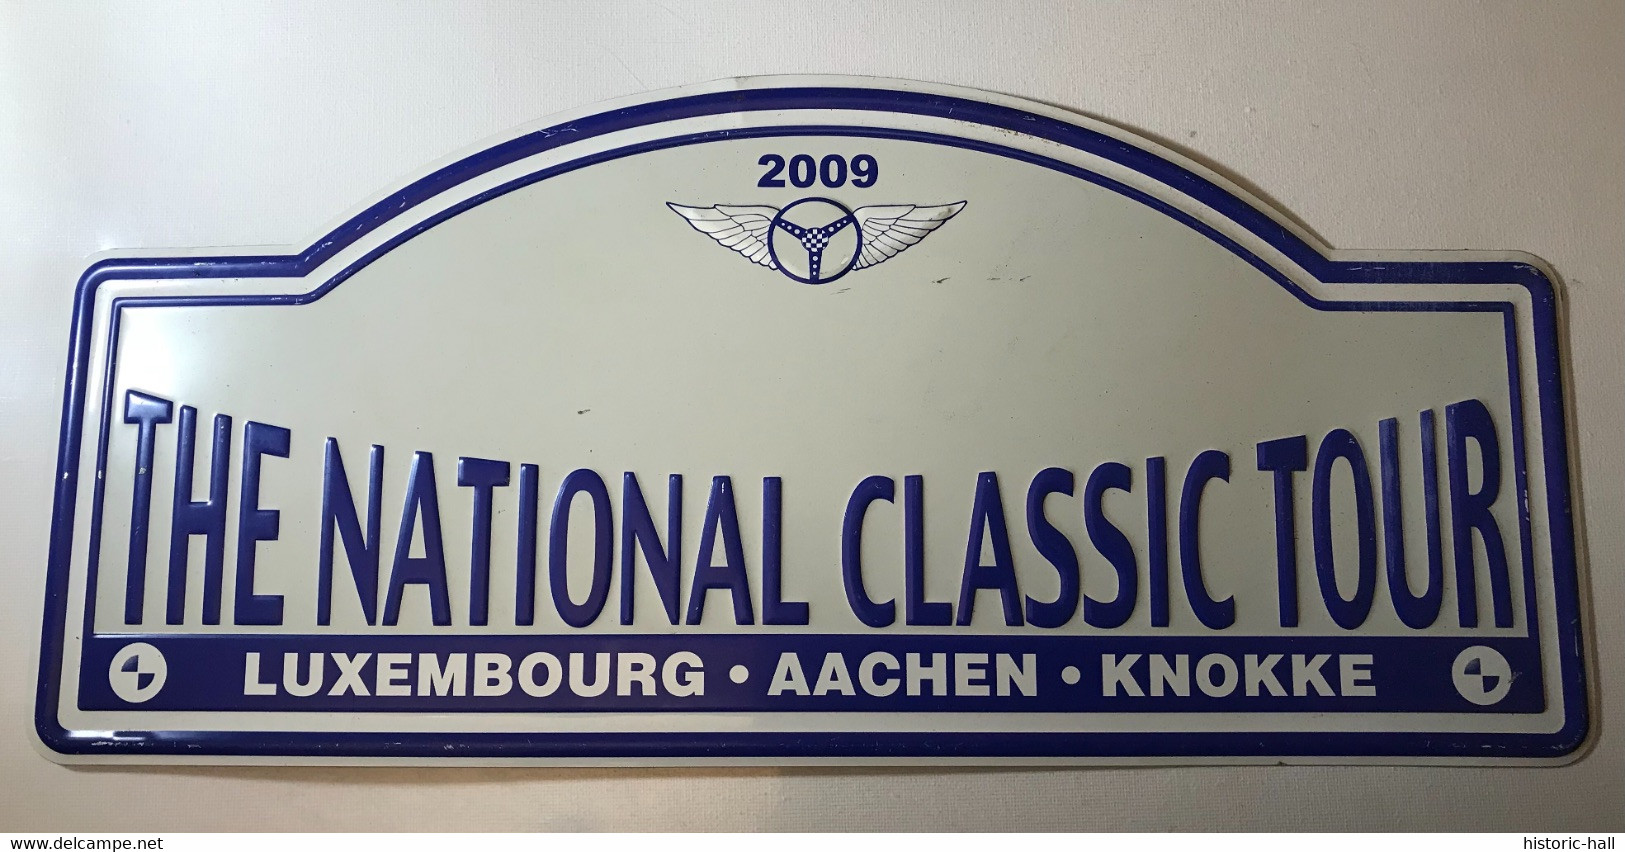 Plaque RALLYE - 2009 - THE NATIONAL CLASSIC TOUR - LUXEMBOURG . AACHEN . KNOKKE - Rallyeschilder